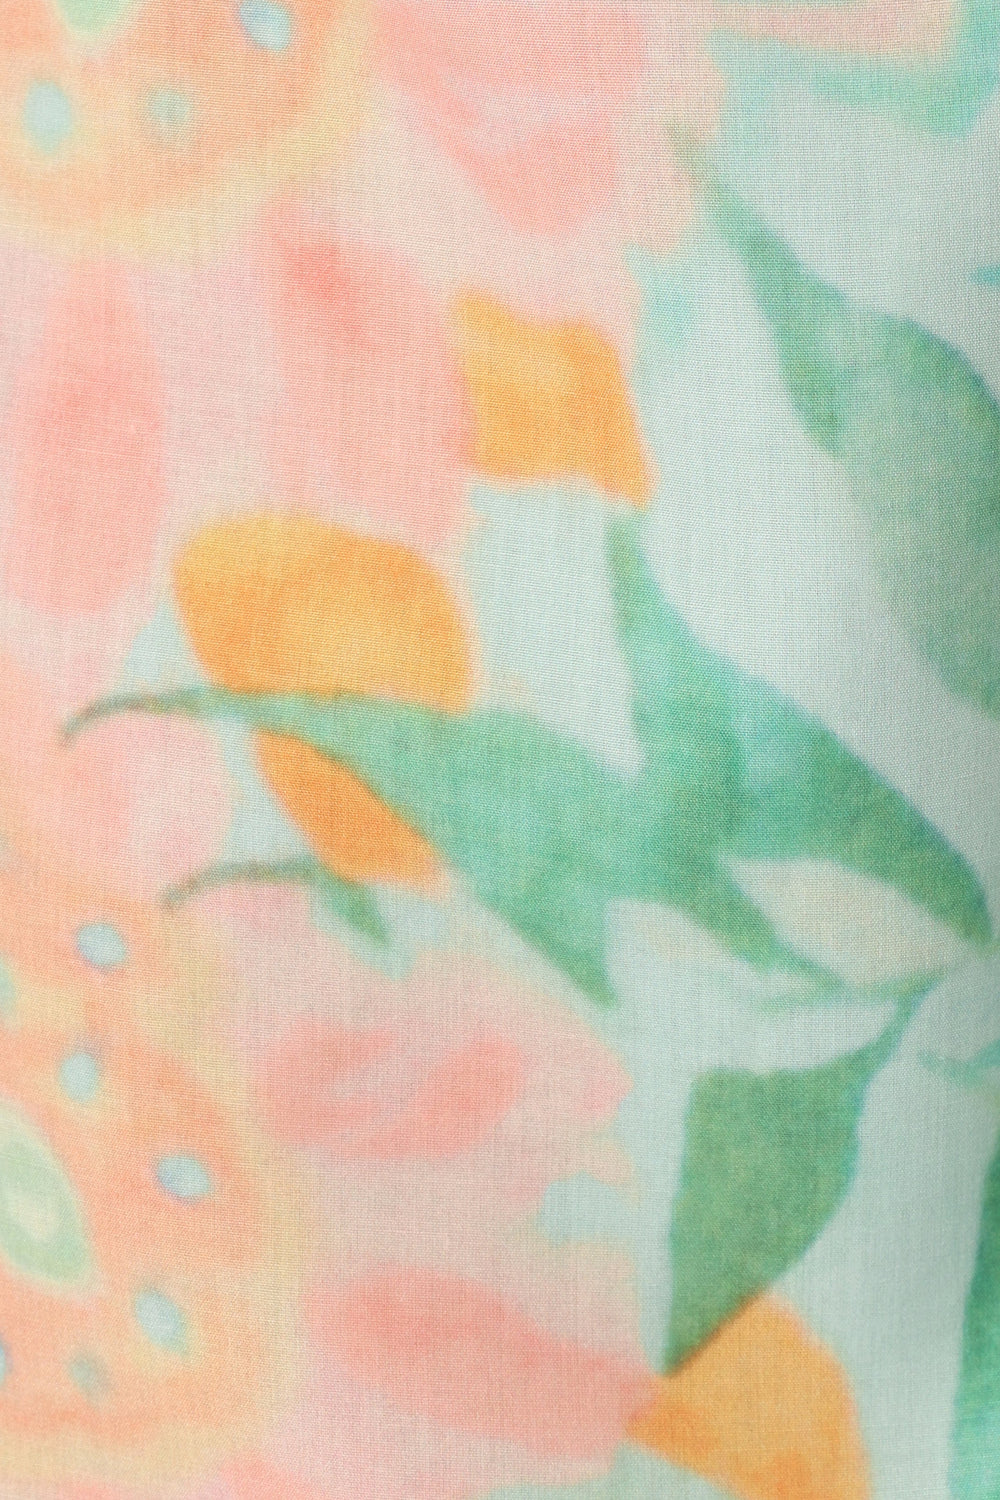 DRESSES @Natalie Puff Sleeve Mini Dress - Coral Print